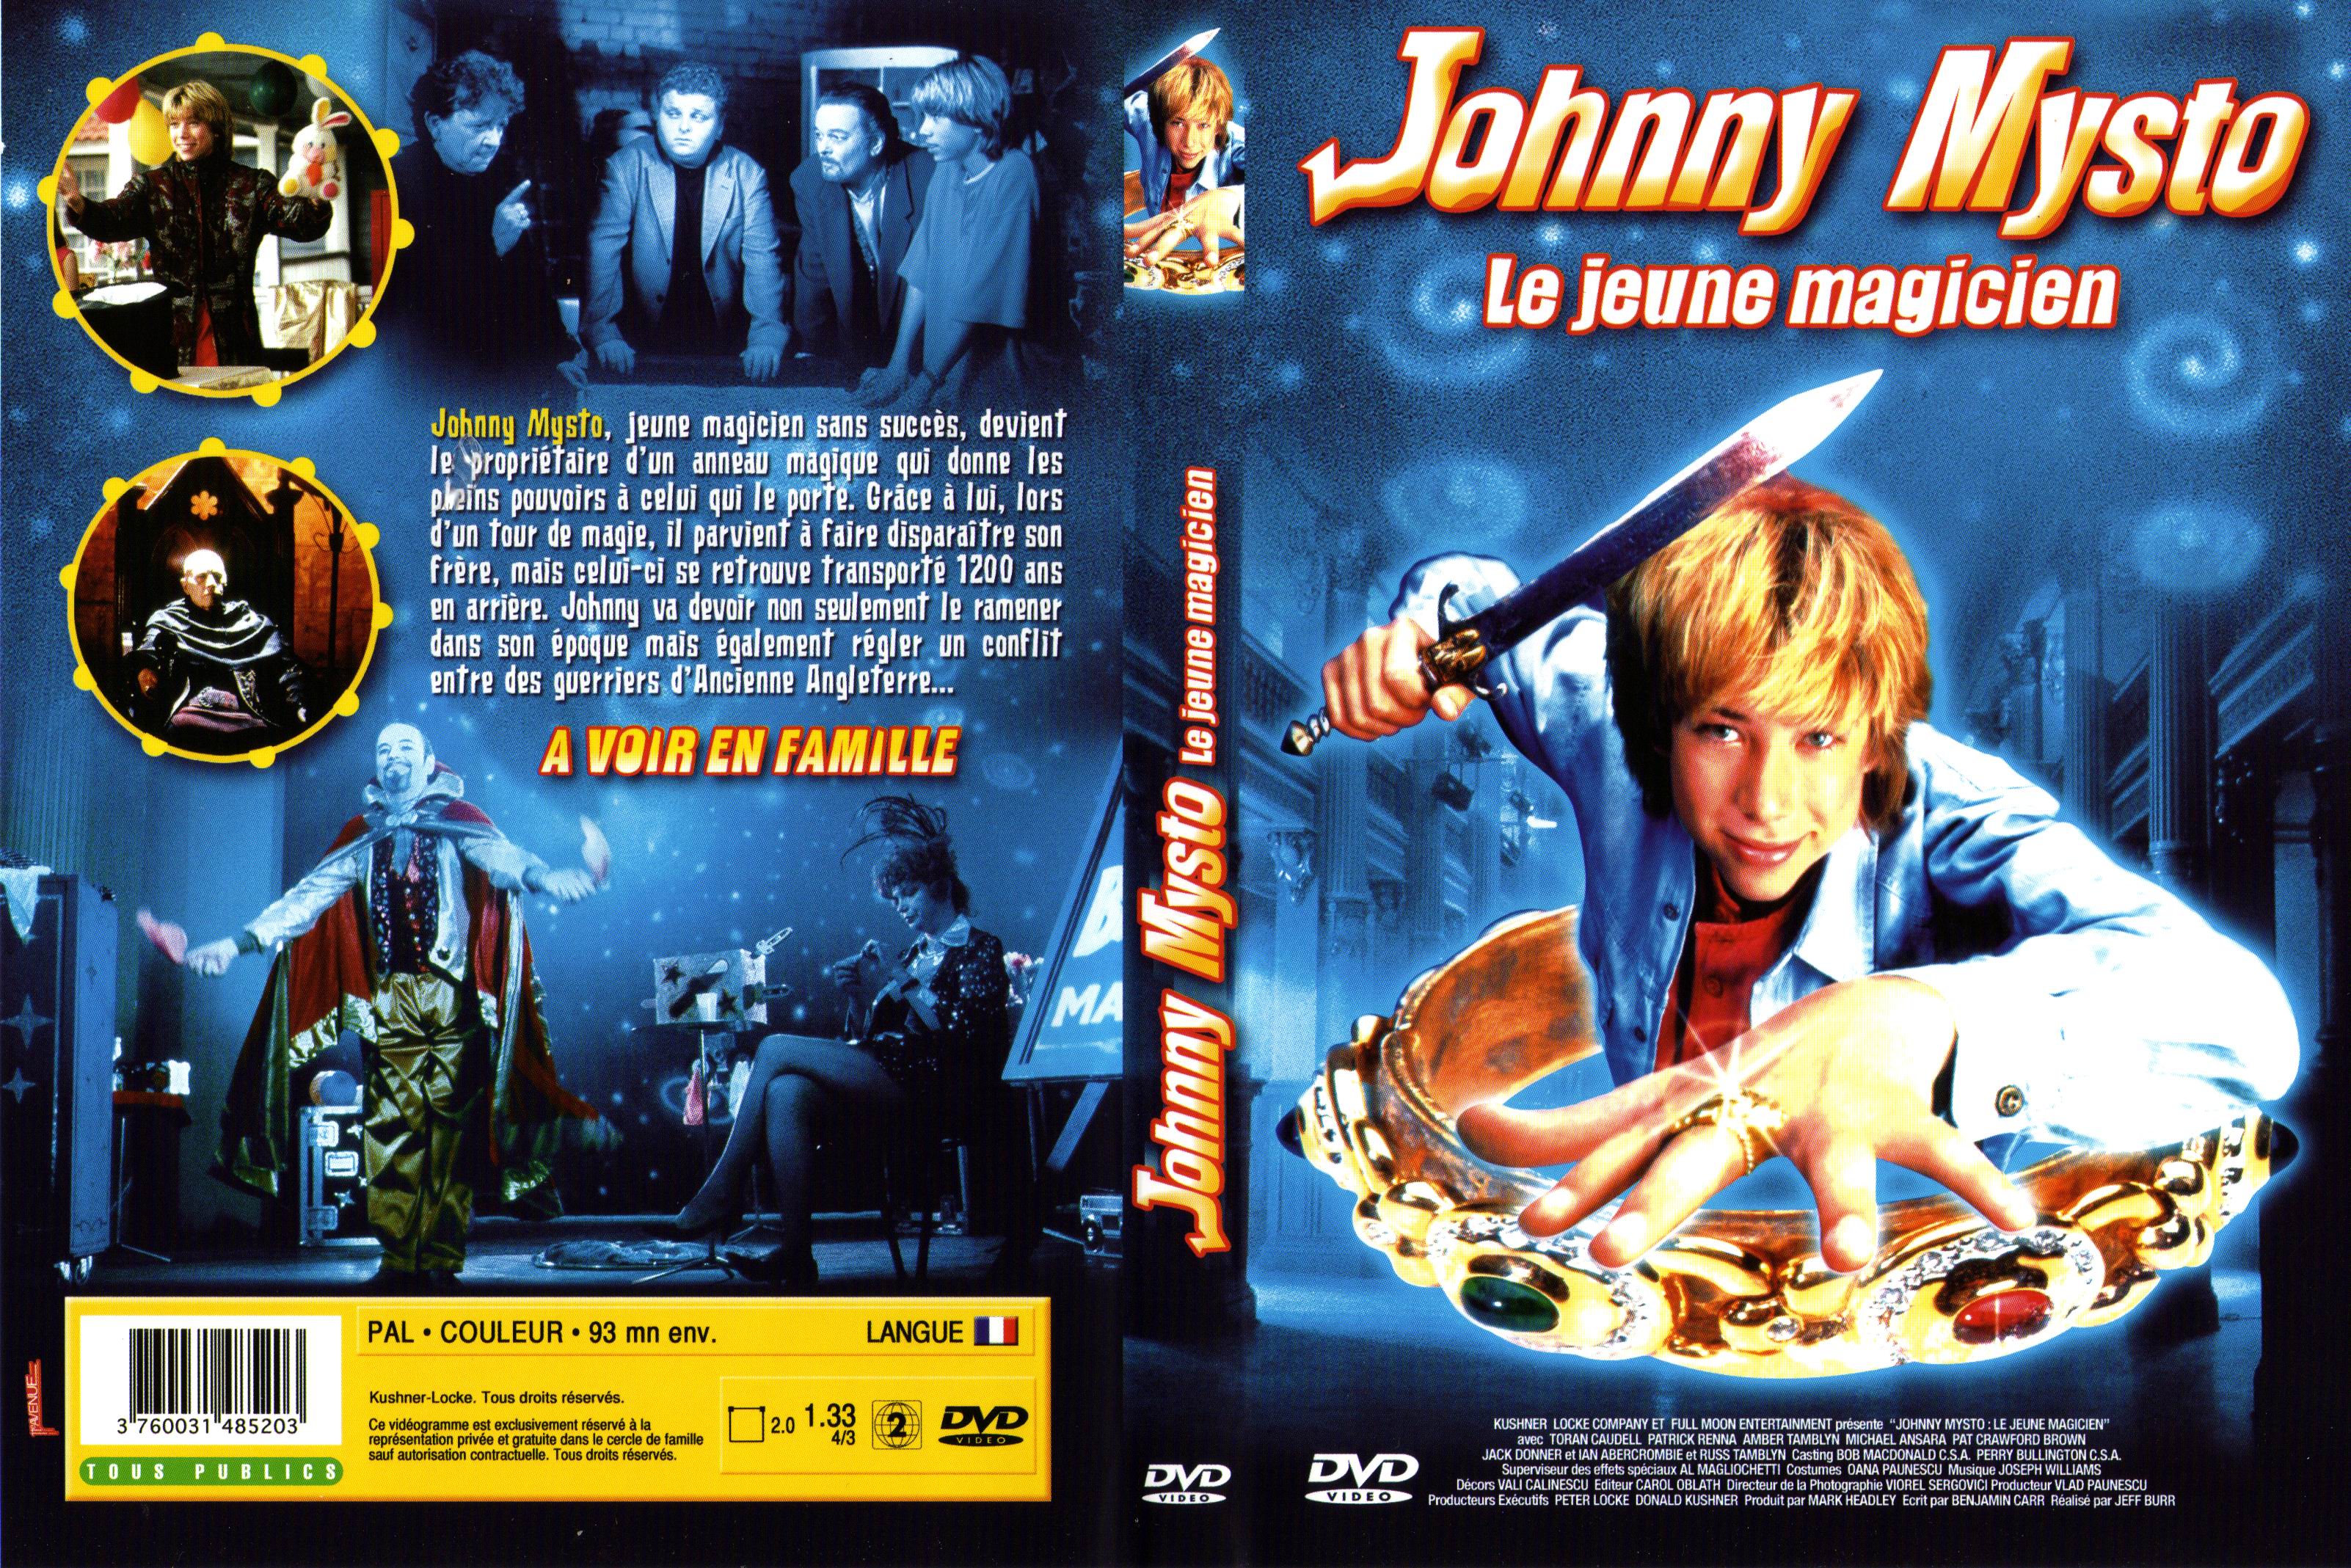 Jaquette DVD Johnny Mysto